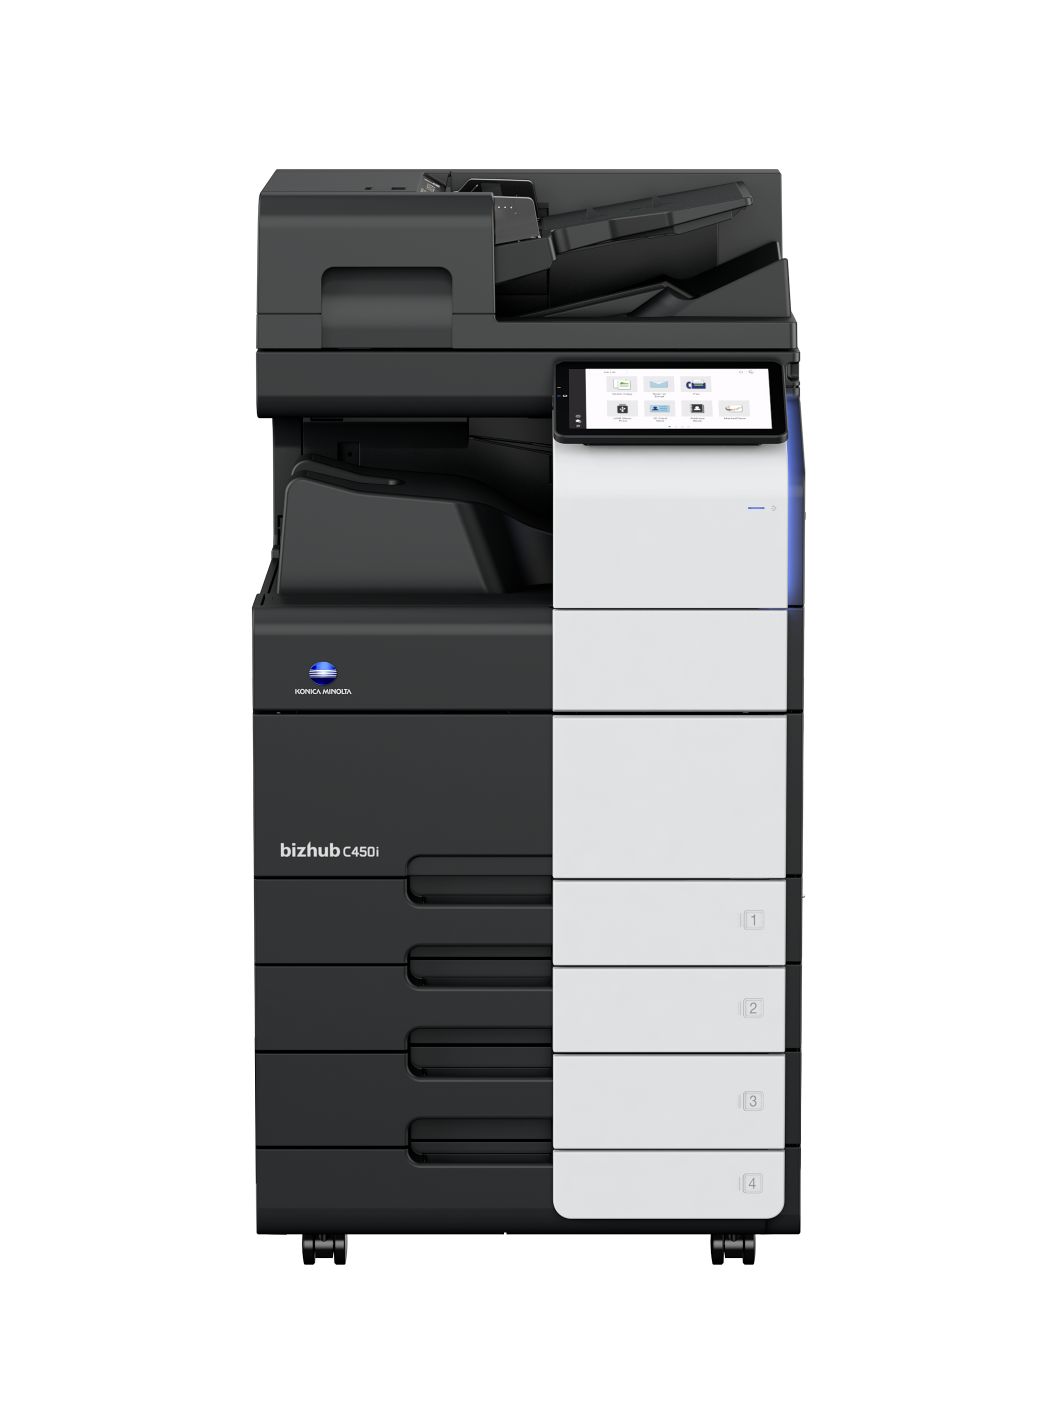 juodai baltas spausdintuvas bizhub C450i basic baltame fone.